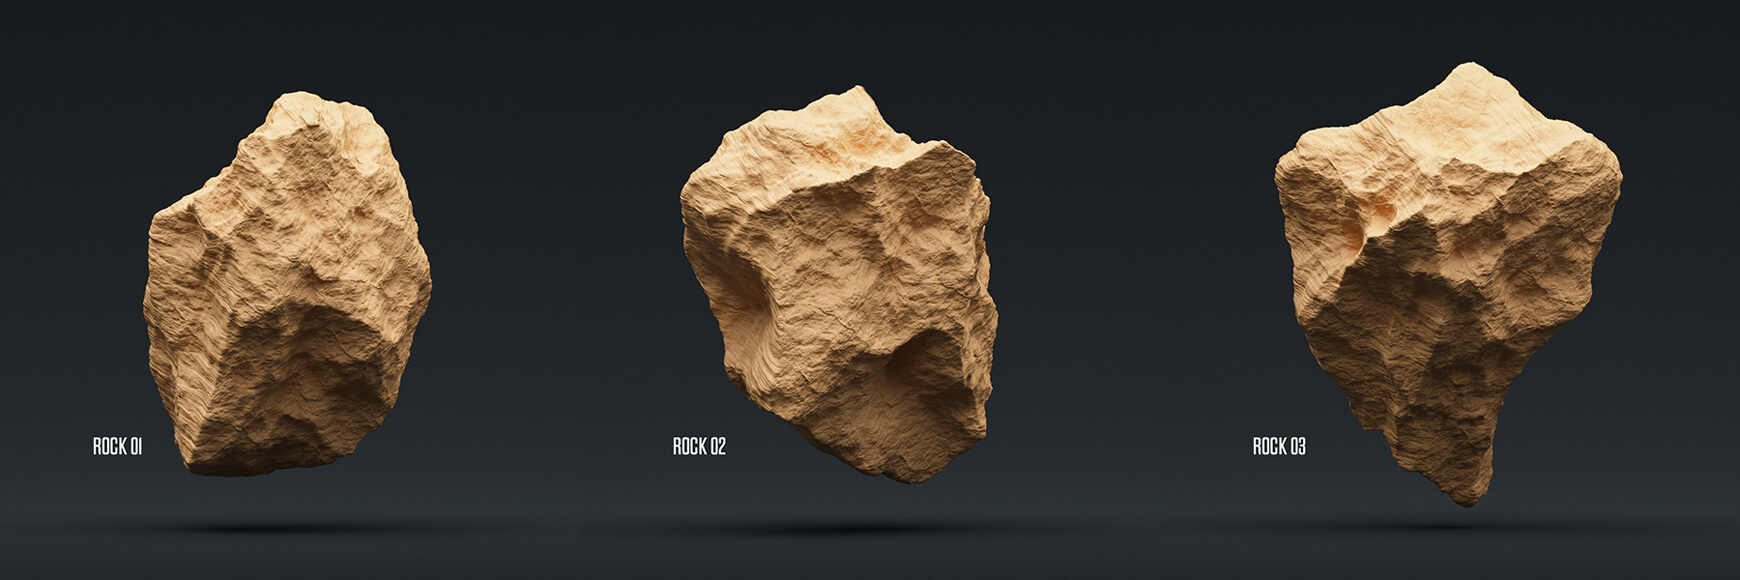 Free Cinema 4D C4D 3D Model Rock Boulder